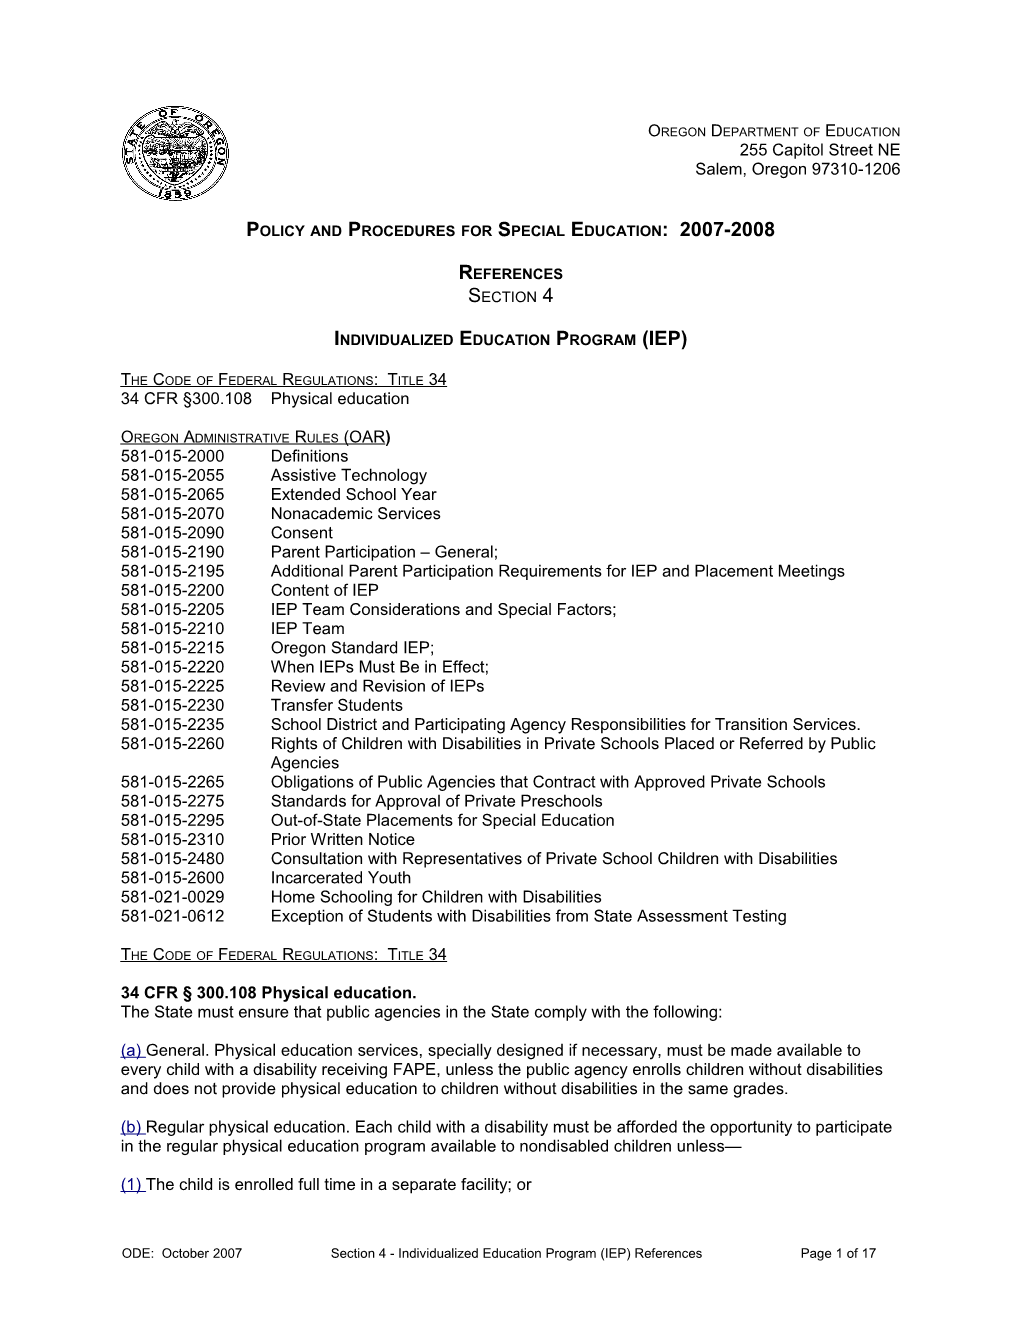 References: Section 4 - Individualized Education Program (IEP)